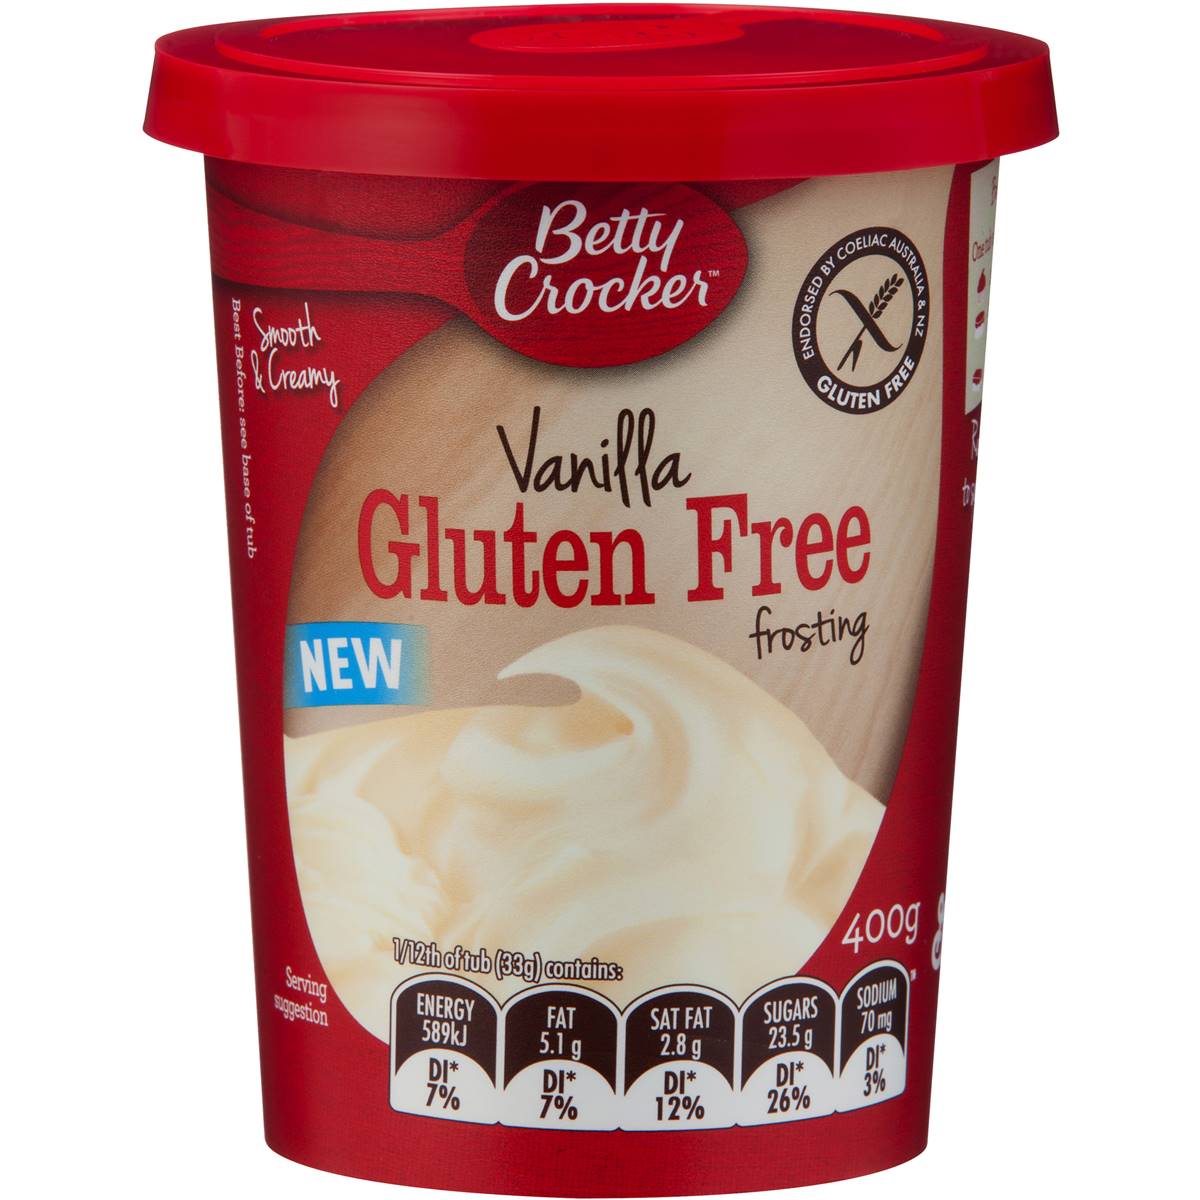 Betty Crocker Vanilla Gluten Free Frosting 400g